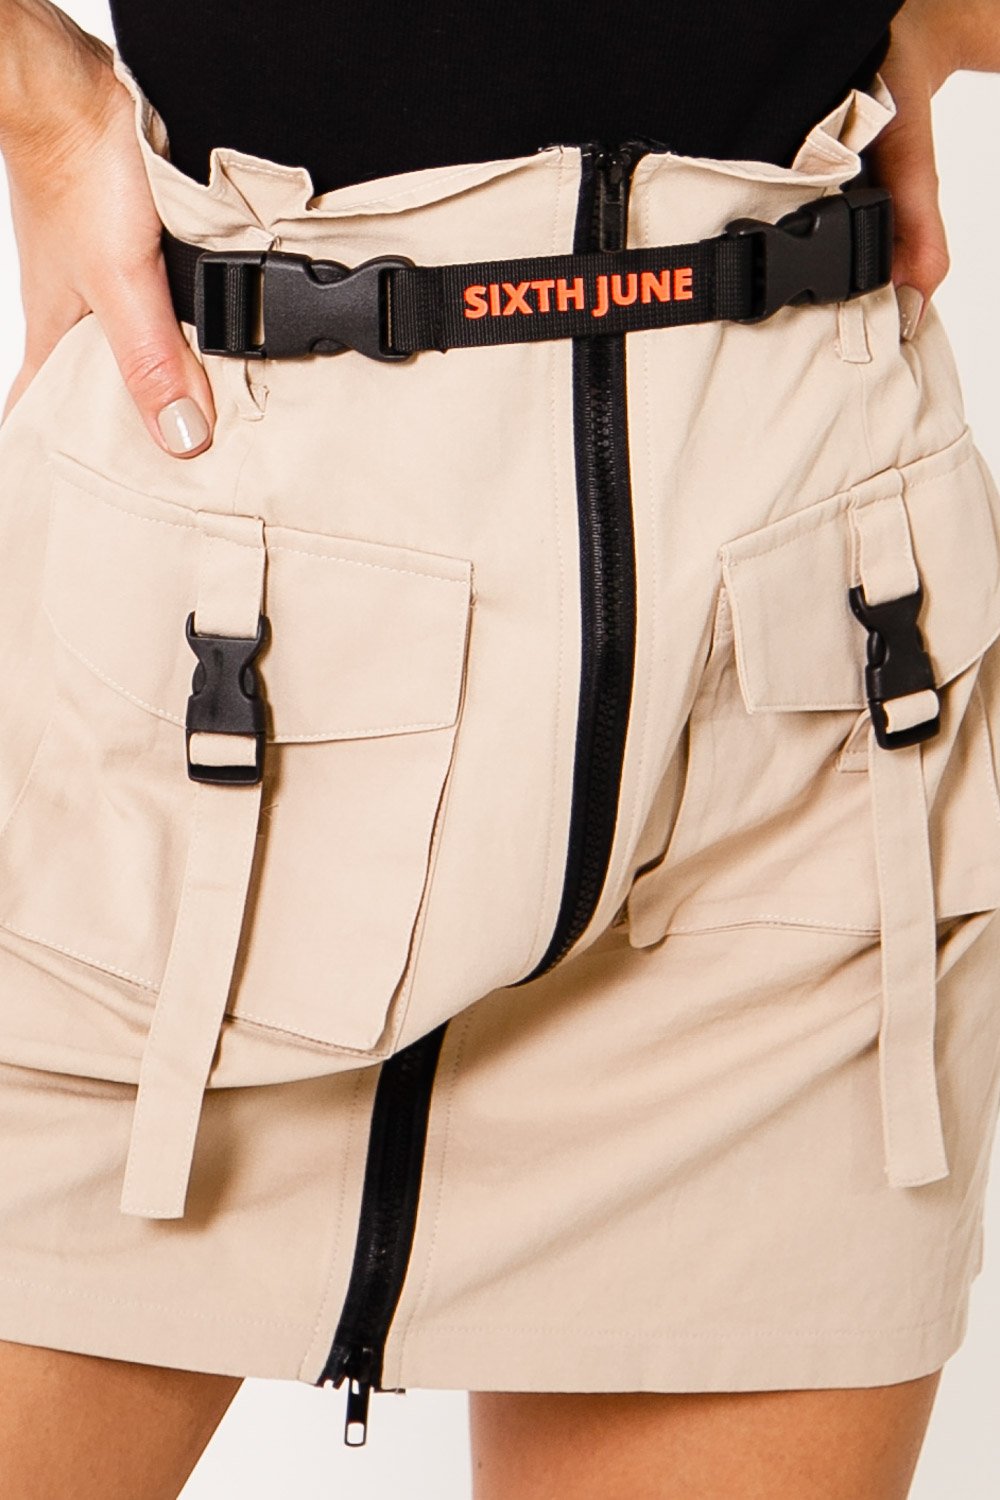 Sixth June - Jupe cargo ceinture Beige clair